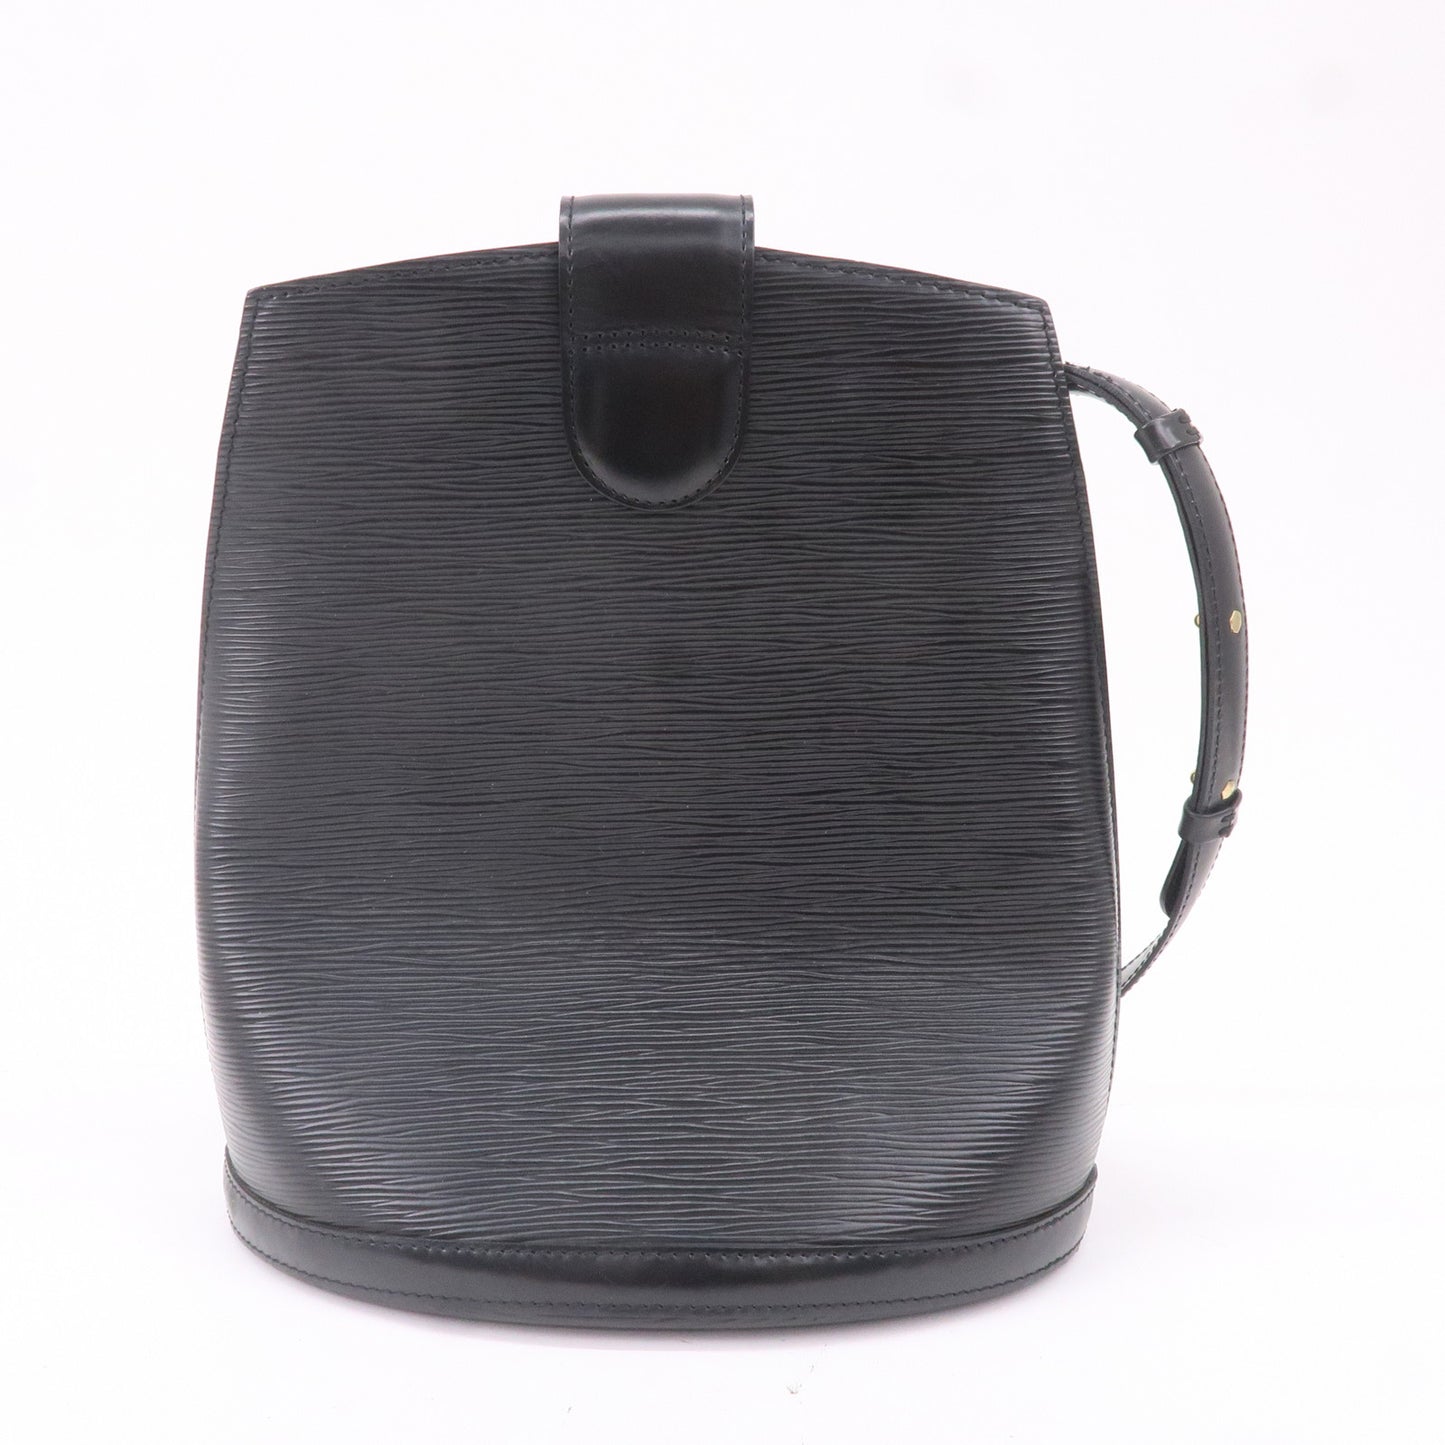 Louis Vuitton Cluny Epi Leather Shoulder Bag on SALE